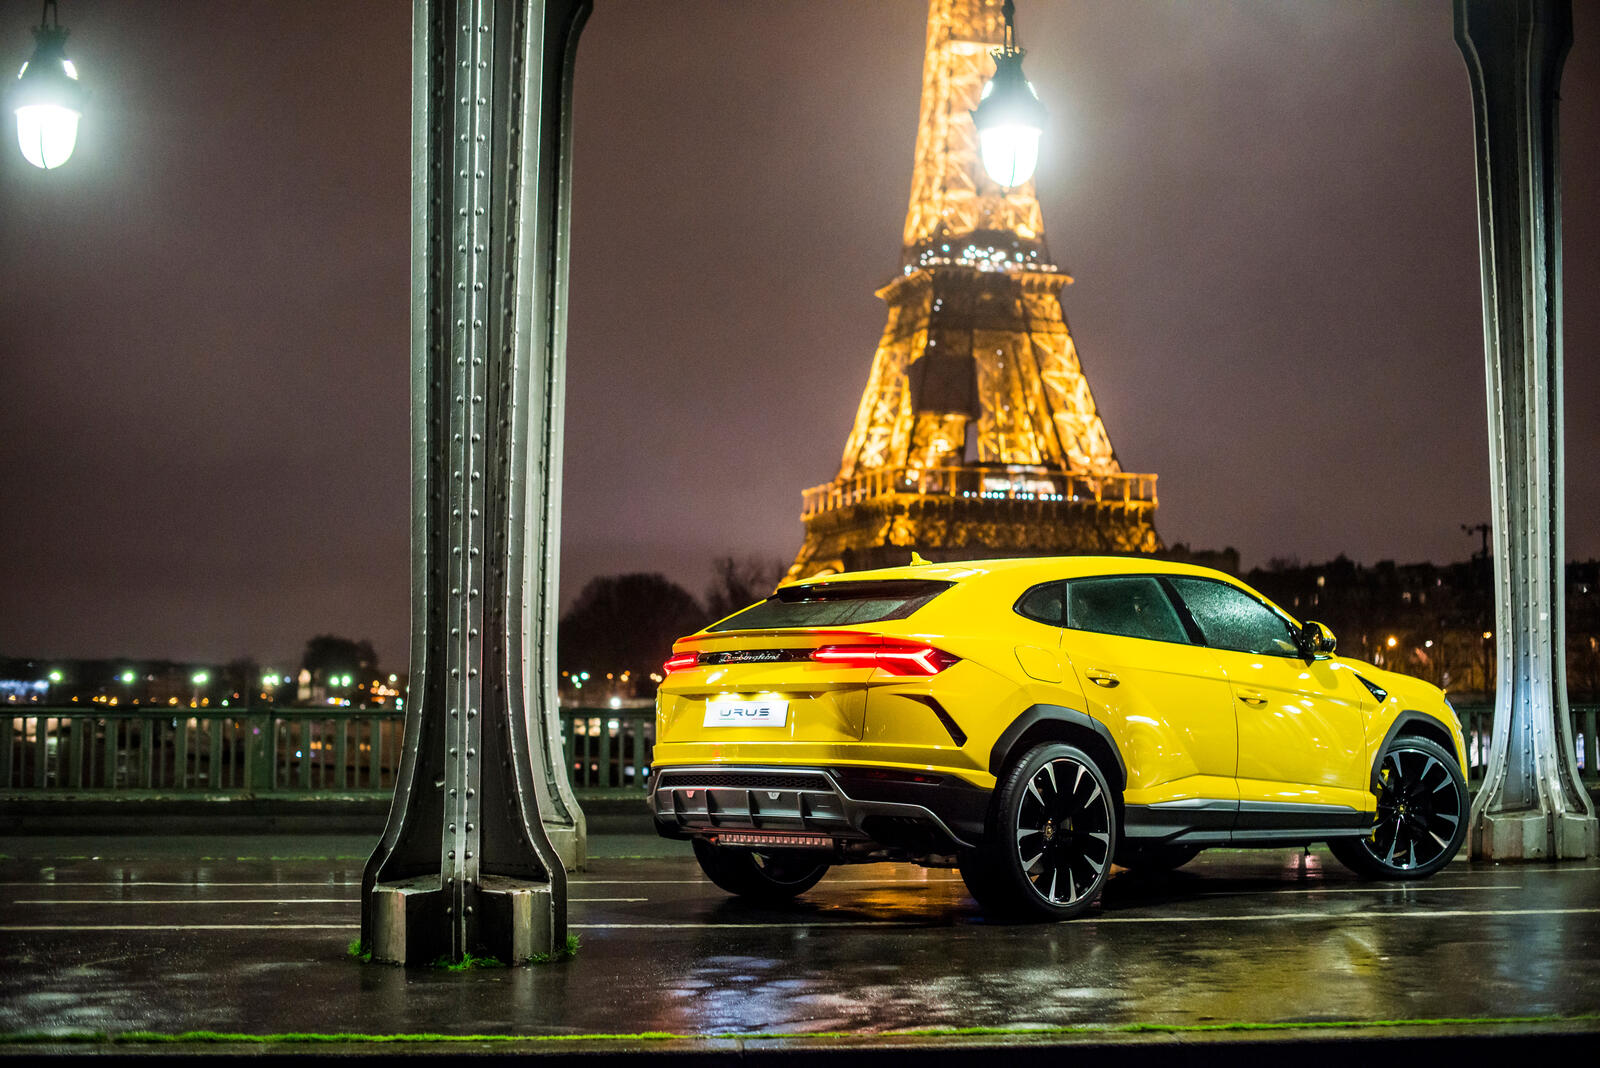 Бесплатное фото Желтый Lamborghini Urus на фоне эйфелевой башни